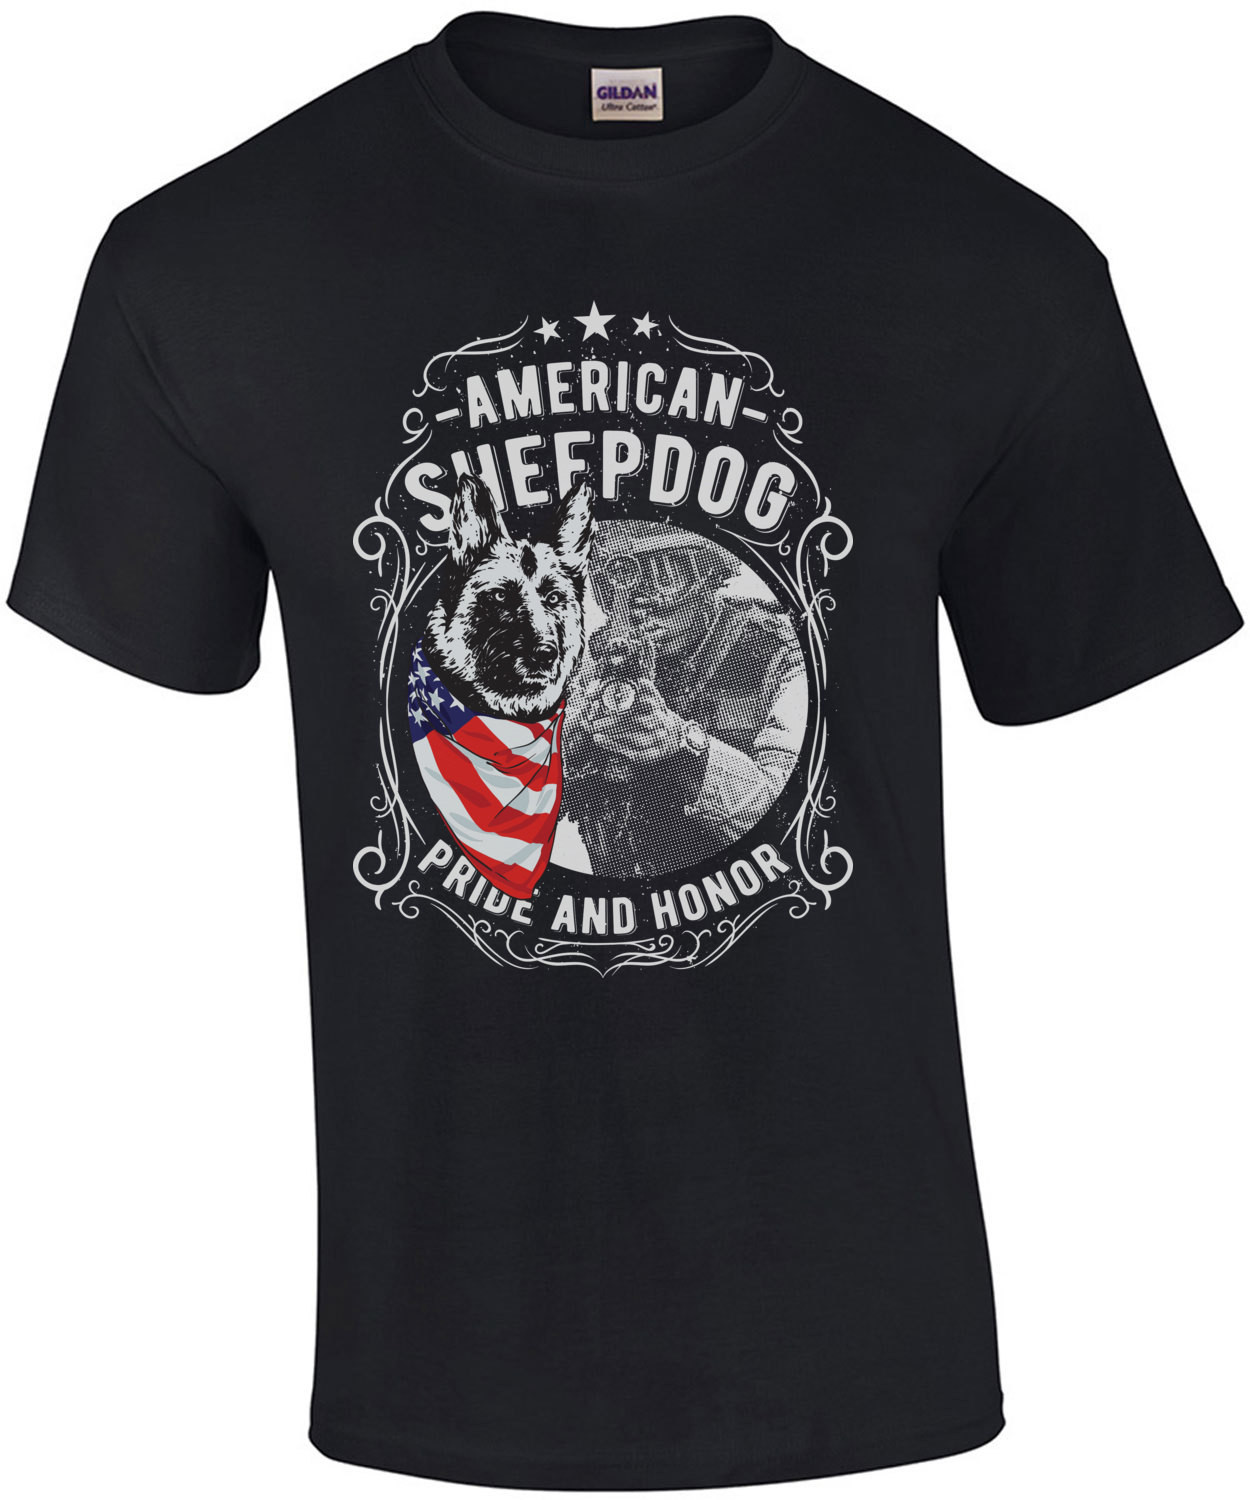 American Sheep Dog Patriotic T-Shirt